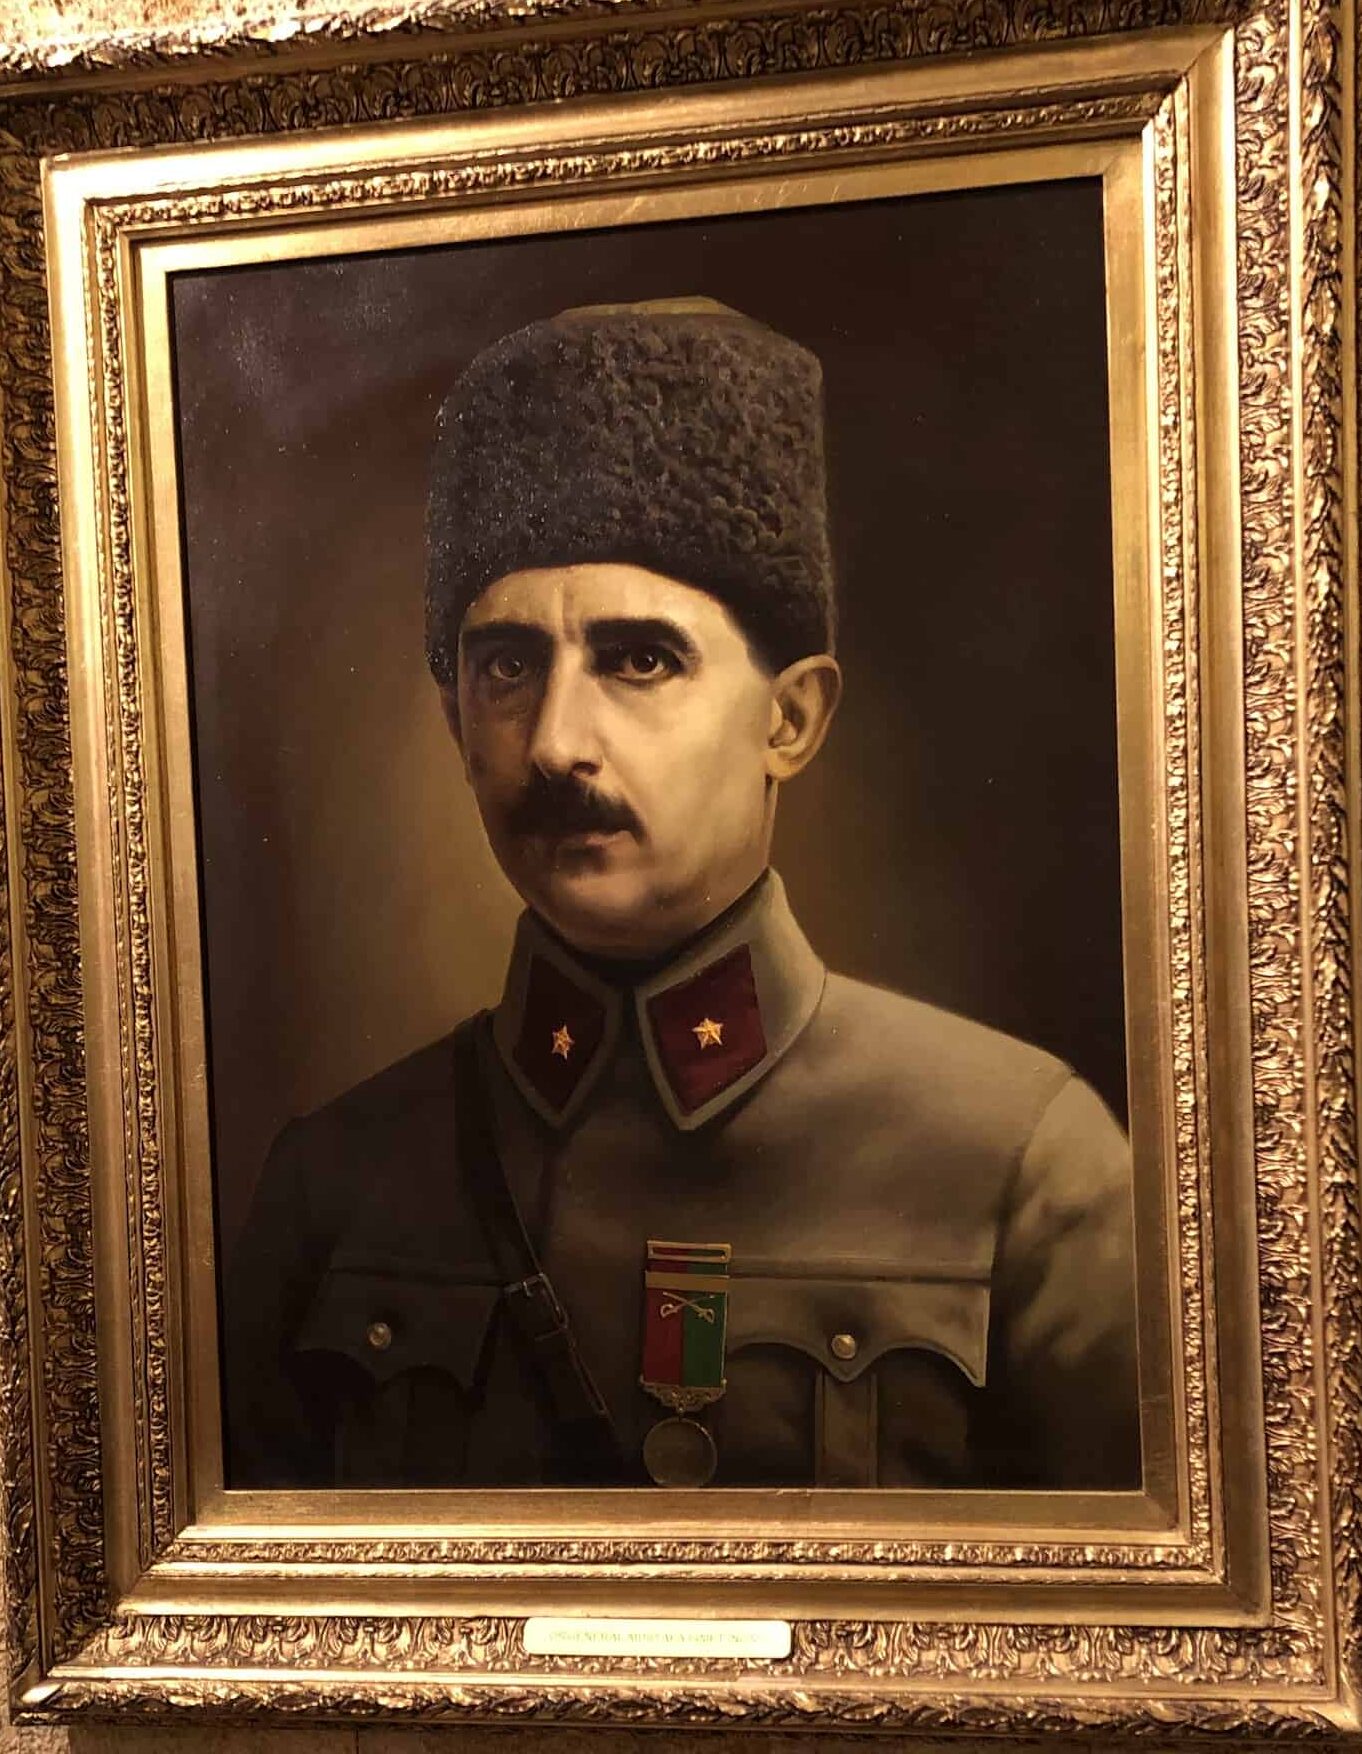 İsmet İnönü at the Atatürk and War of Independence Museum at Anıtkabir in Ankara, Turkey